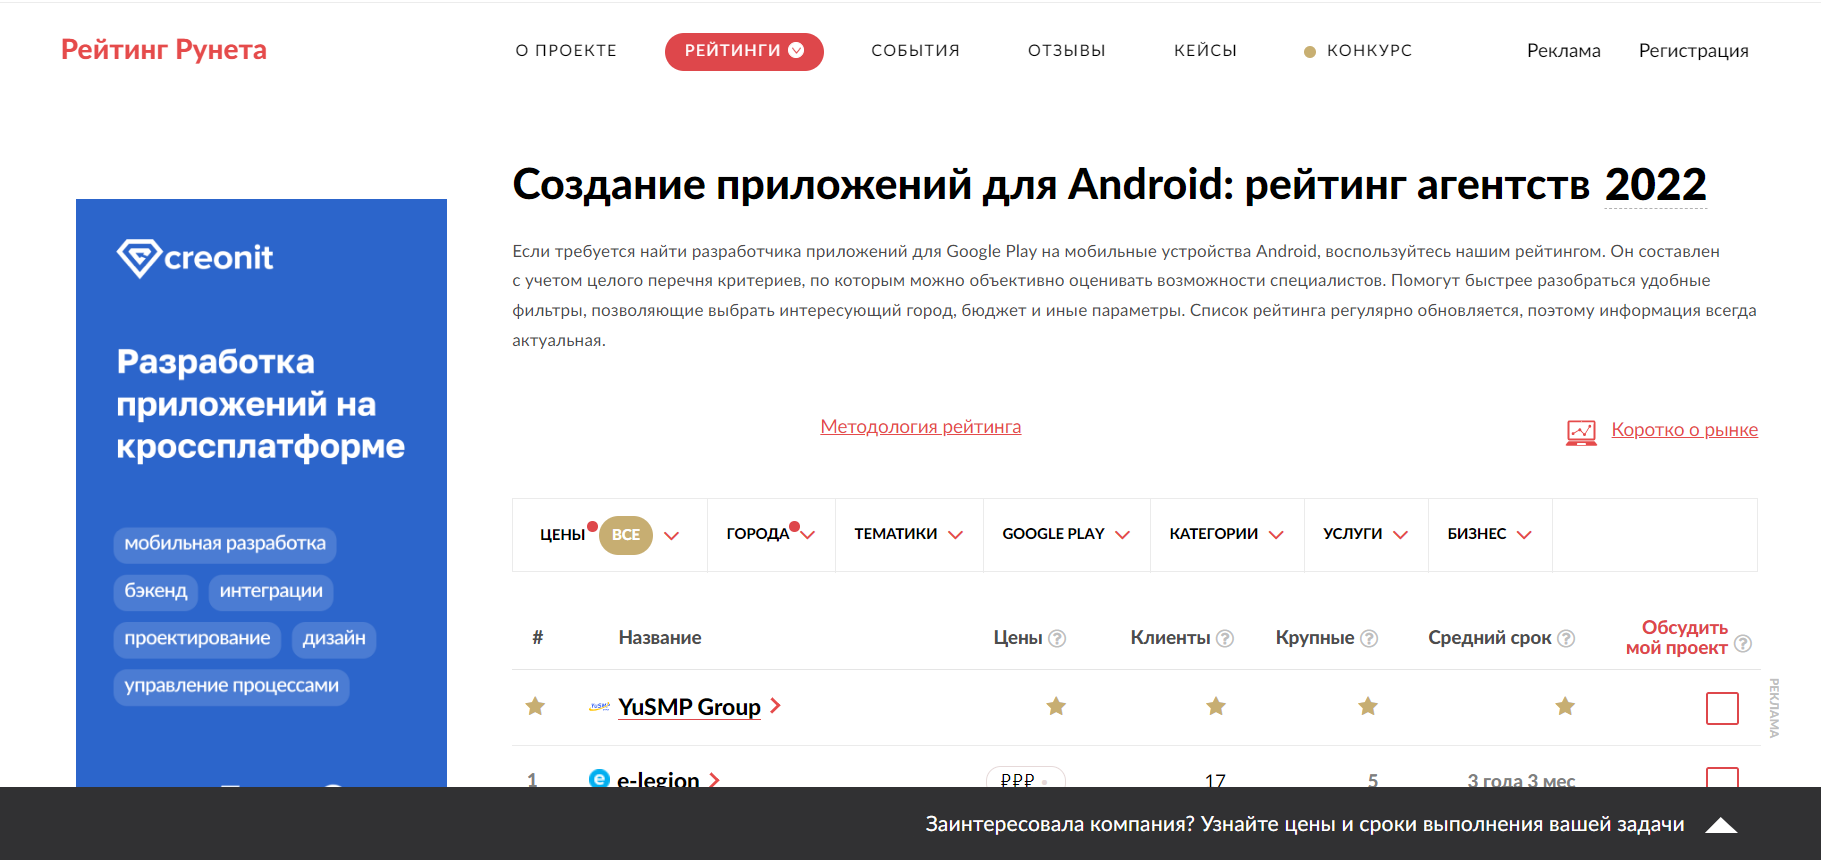 Создание приложений для Android: рейтинг агентств 2022 